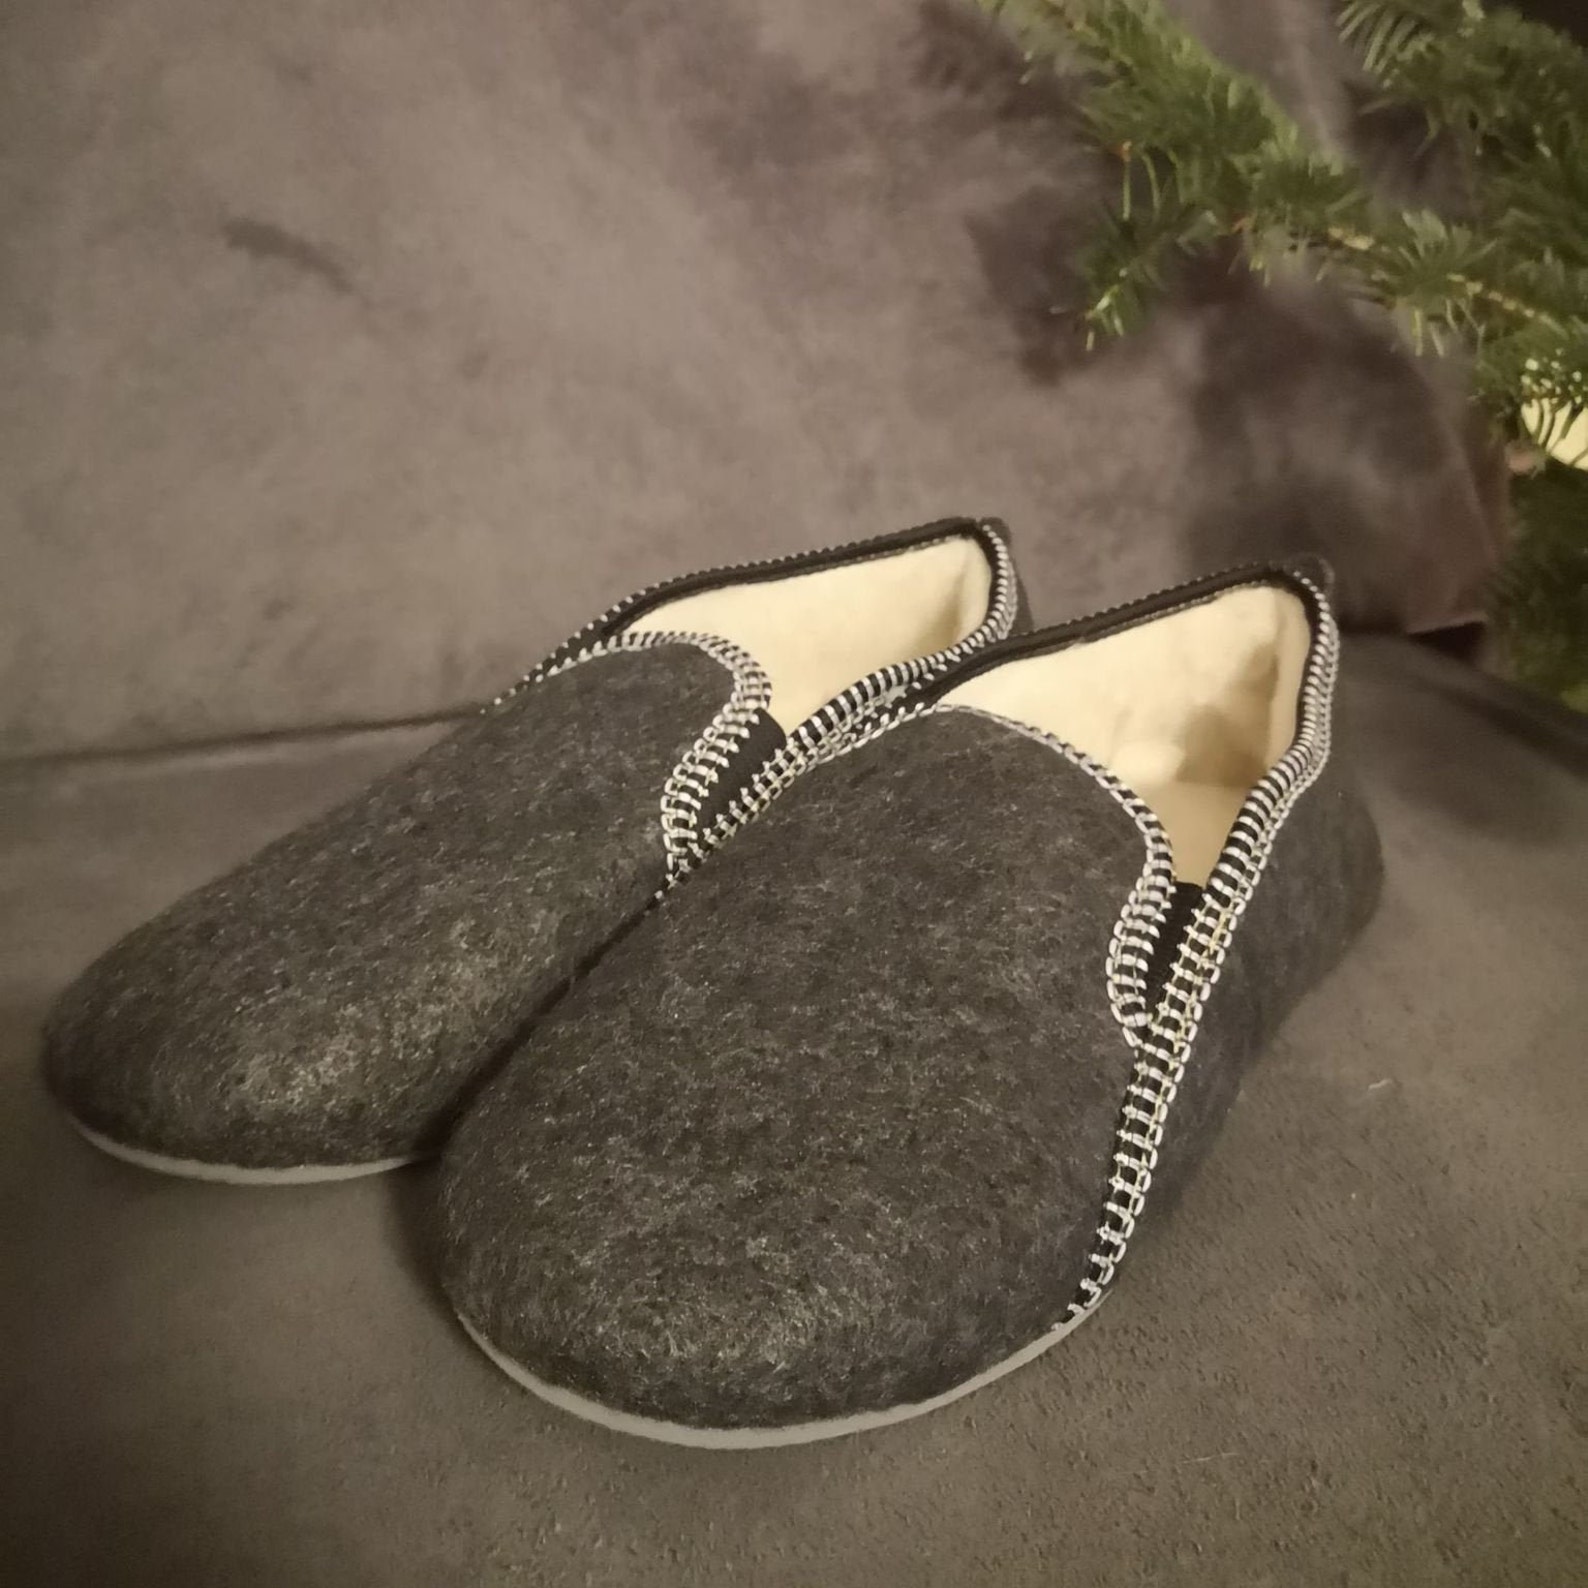 Felt men's slippers Eco friendly 100% natural sheep wool | Etsy